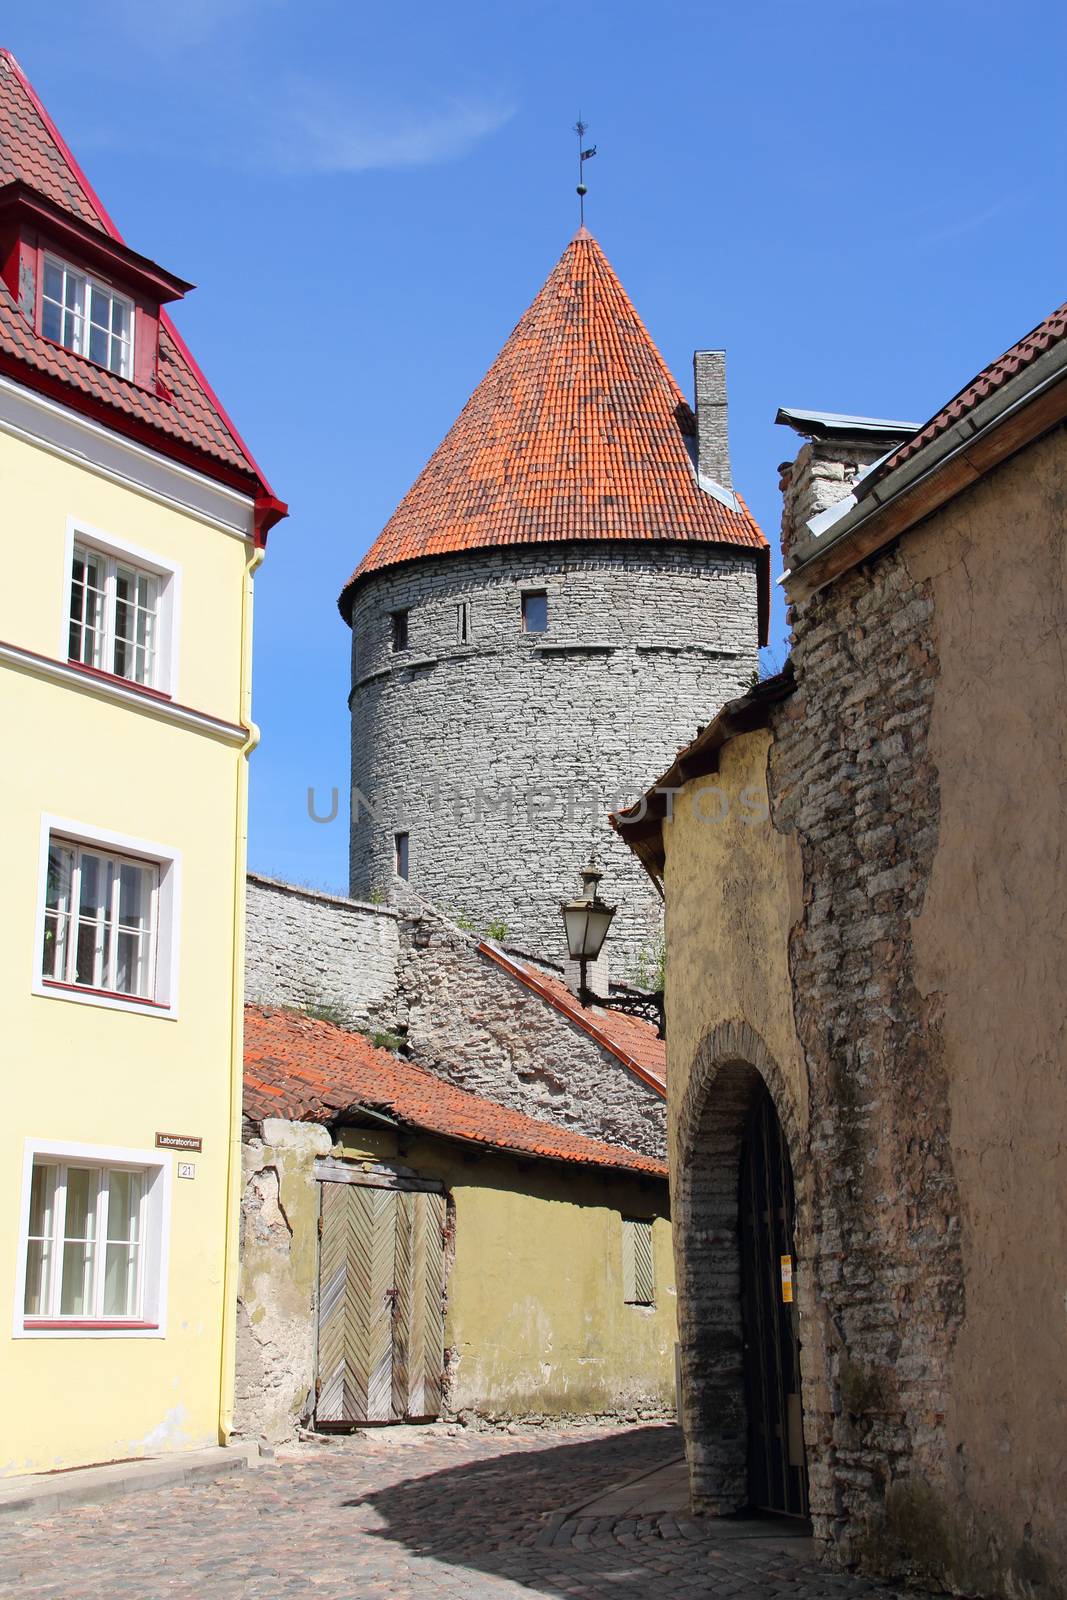 Street in the Old Town of Tallinn by destillat